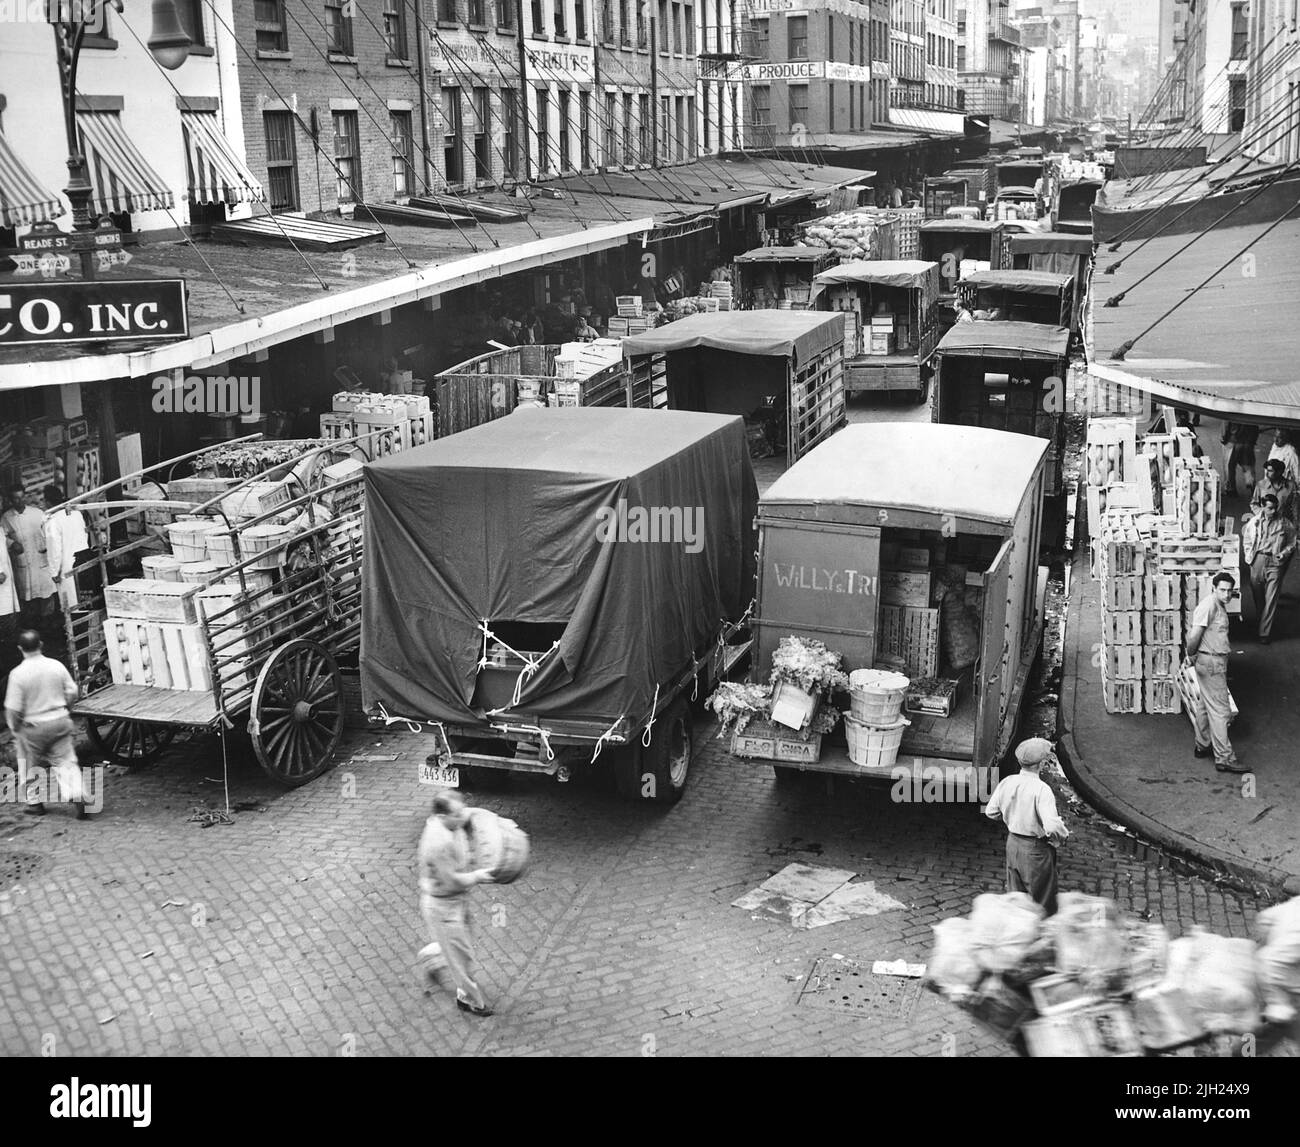 Trucks being loaded with Produce, Washington Market, New York City, New York, USA, Al Ravenna, New York World-Telegram and the Sun Newspaper Photograph Collection, 1946 Stock Photo